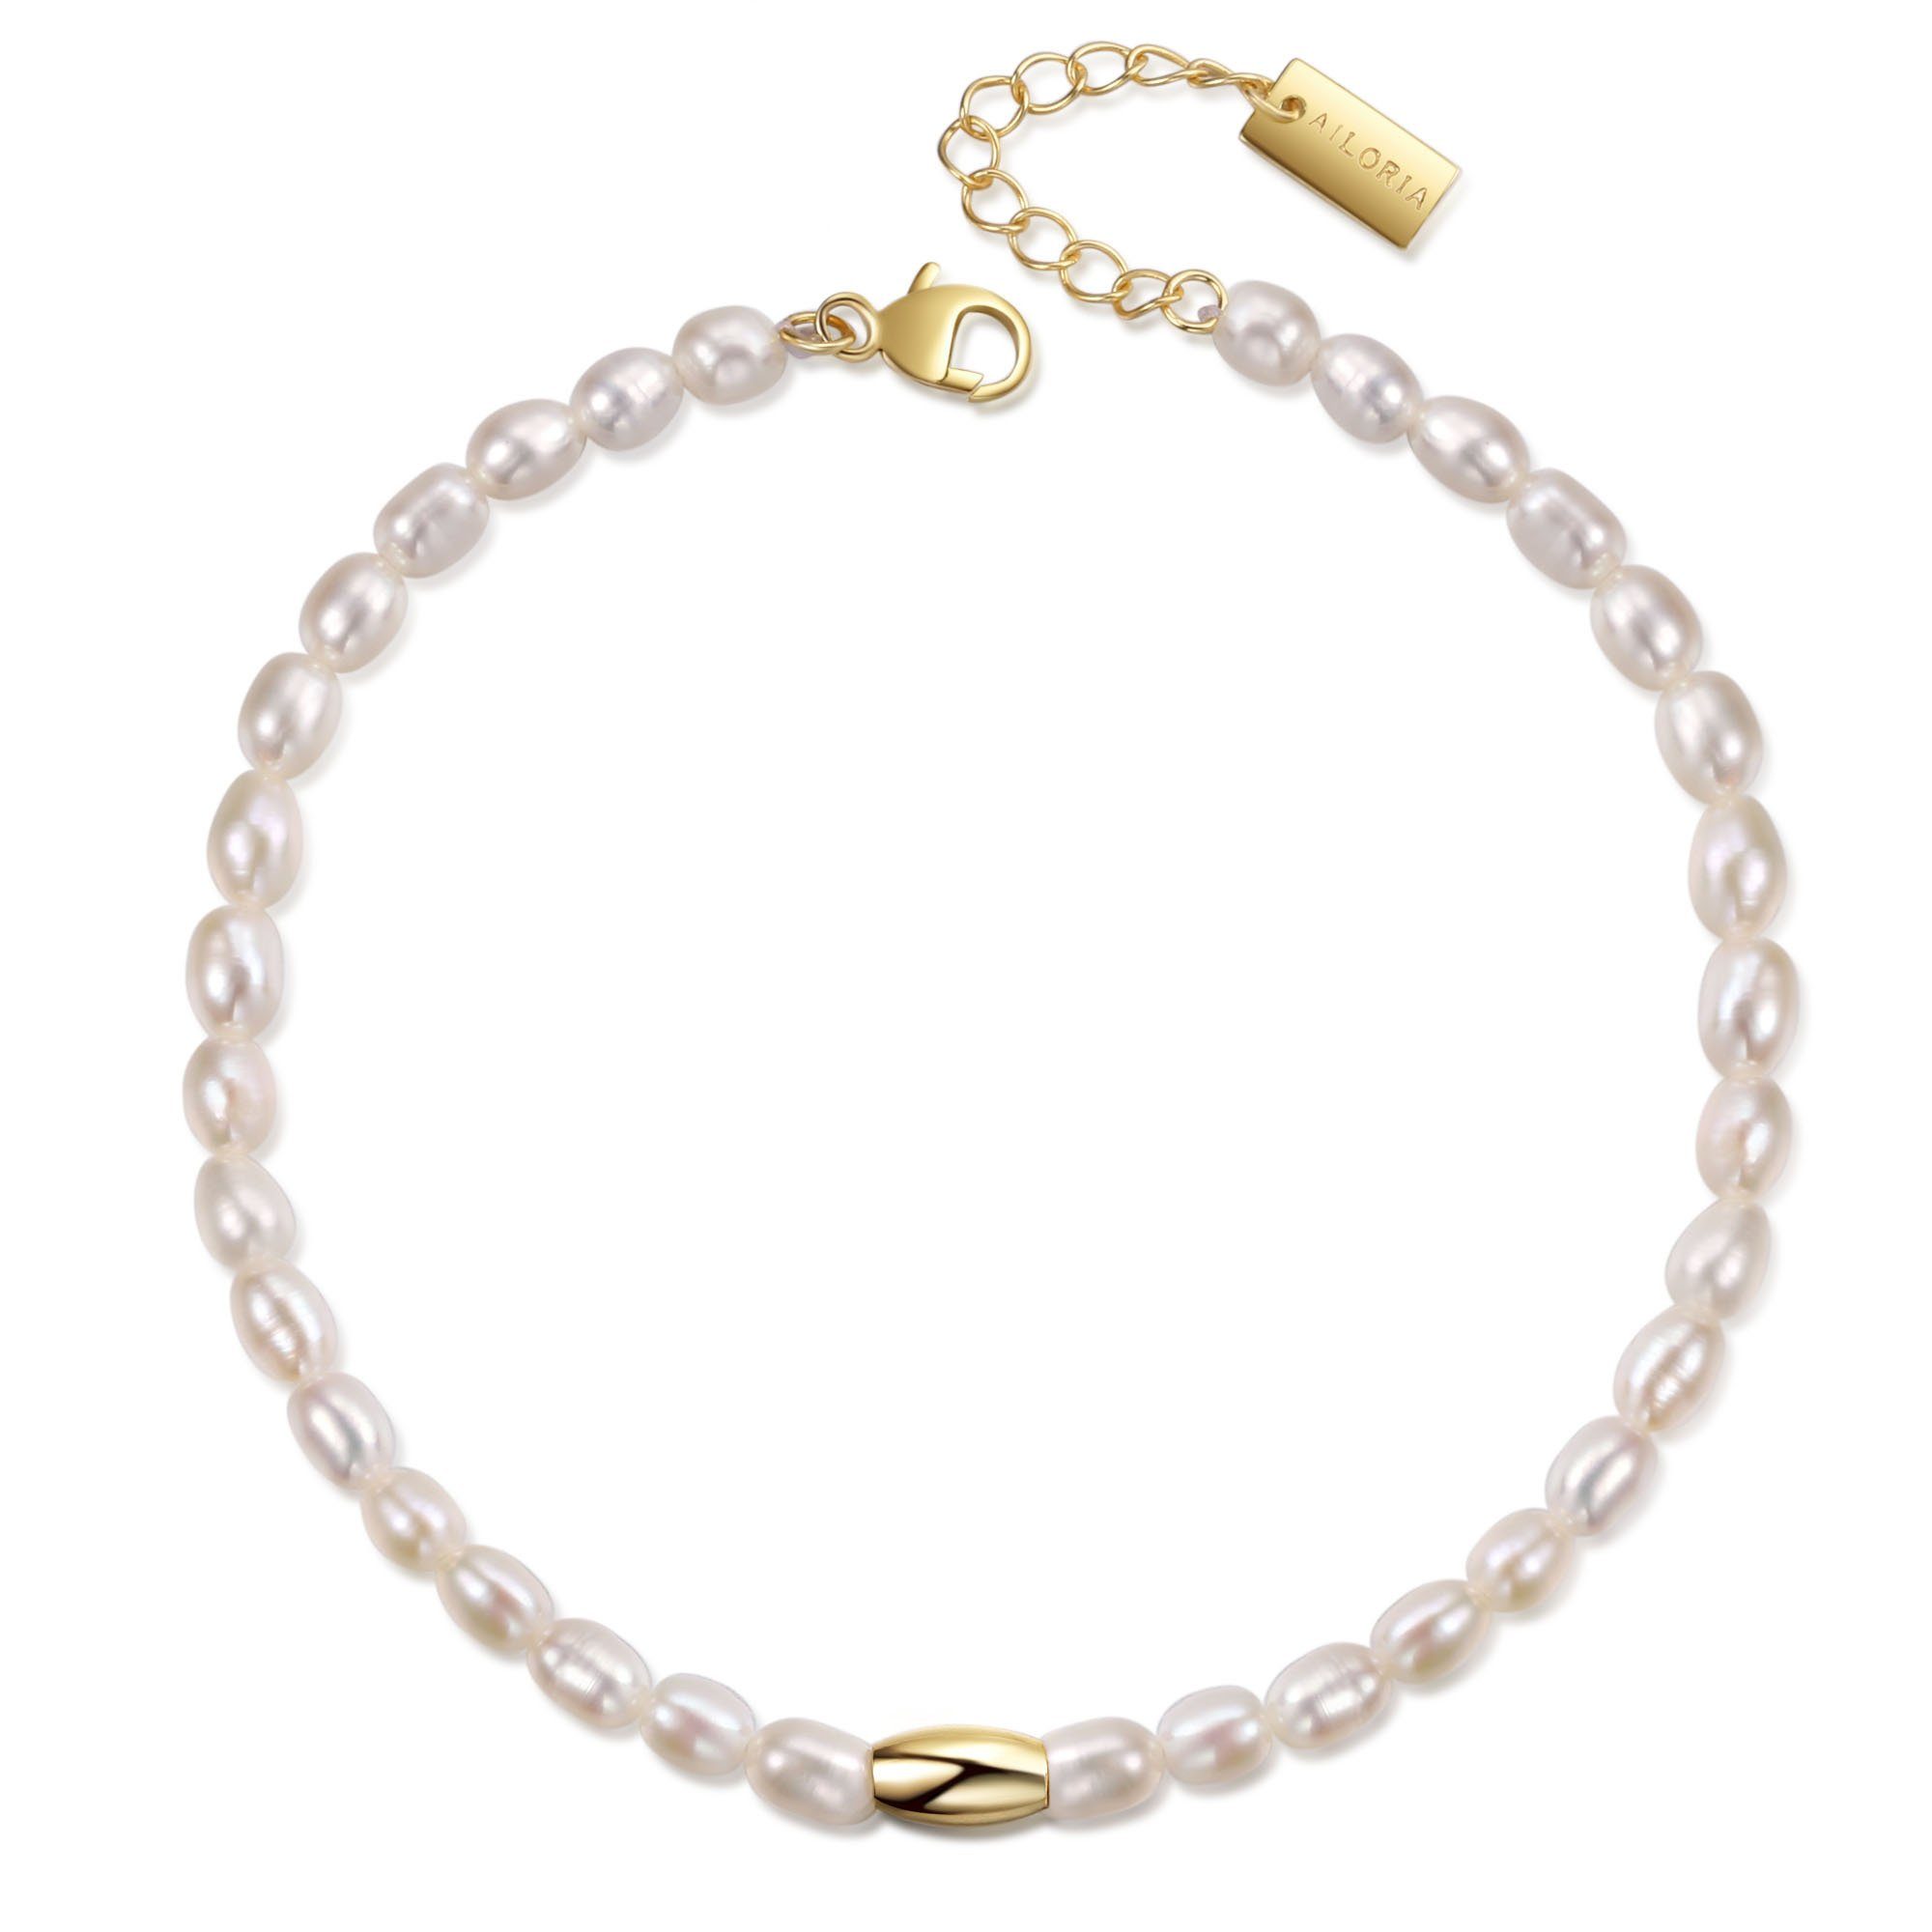 AILORIA Armband SANGO Armband gold/weiße gold/weiße perle, Perle armband